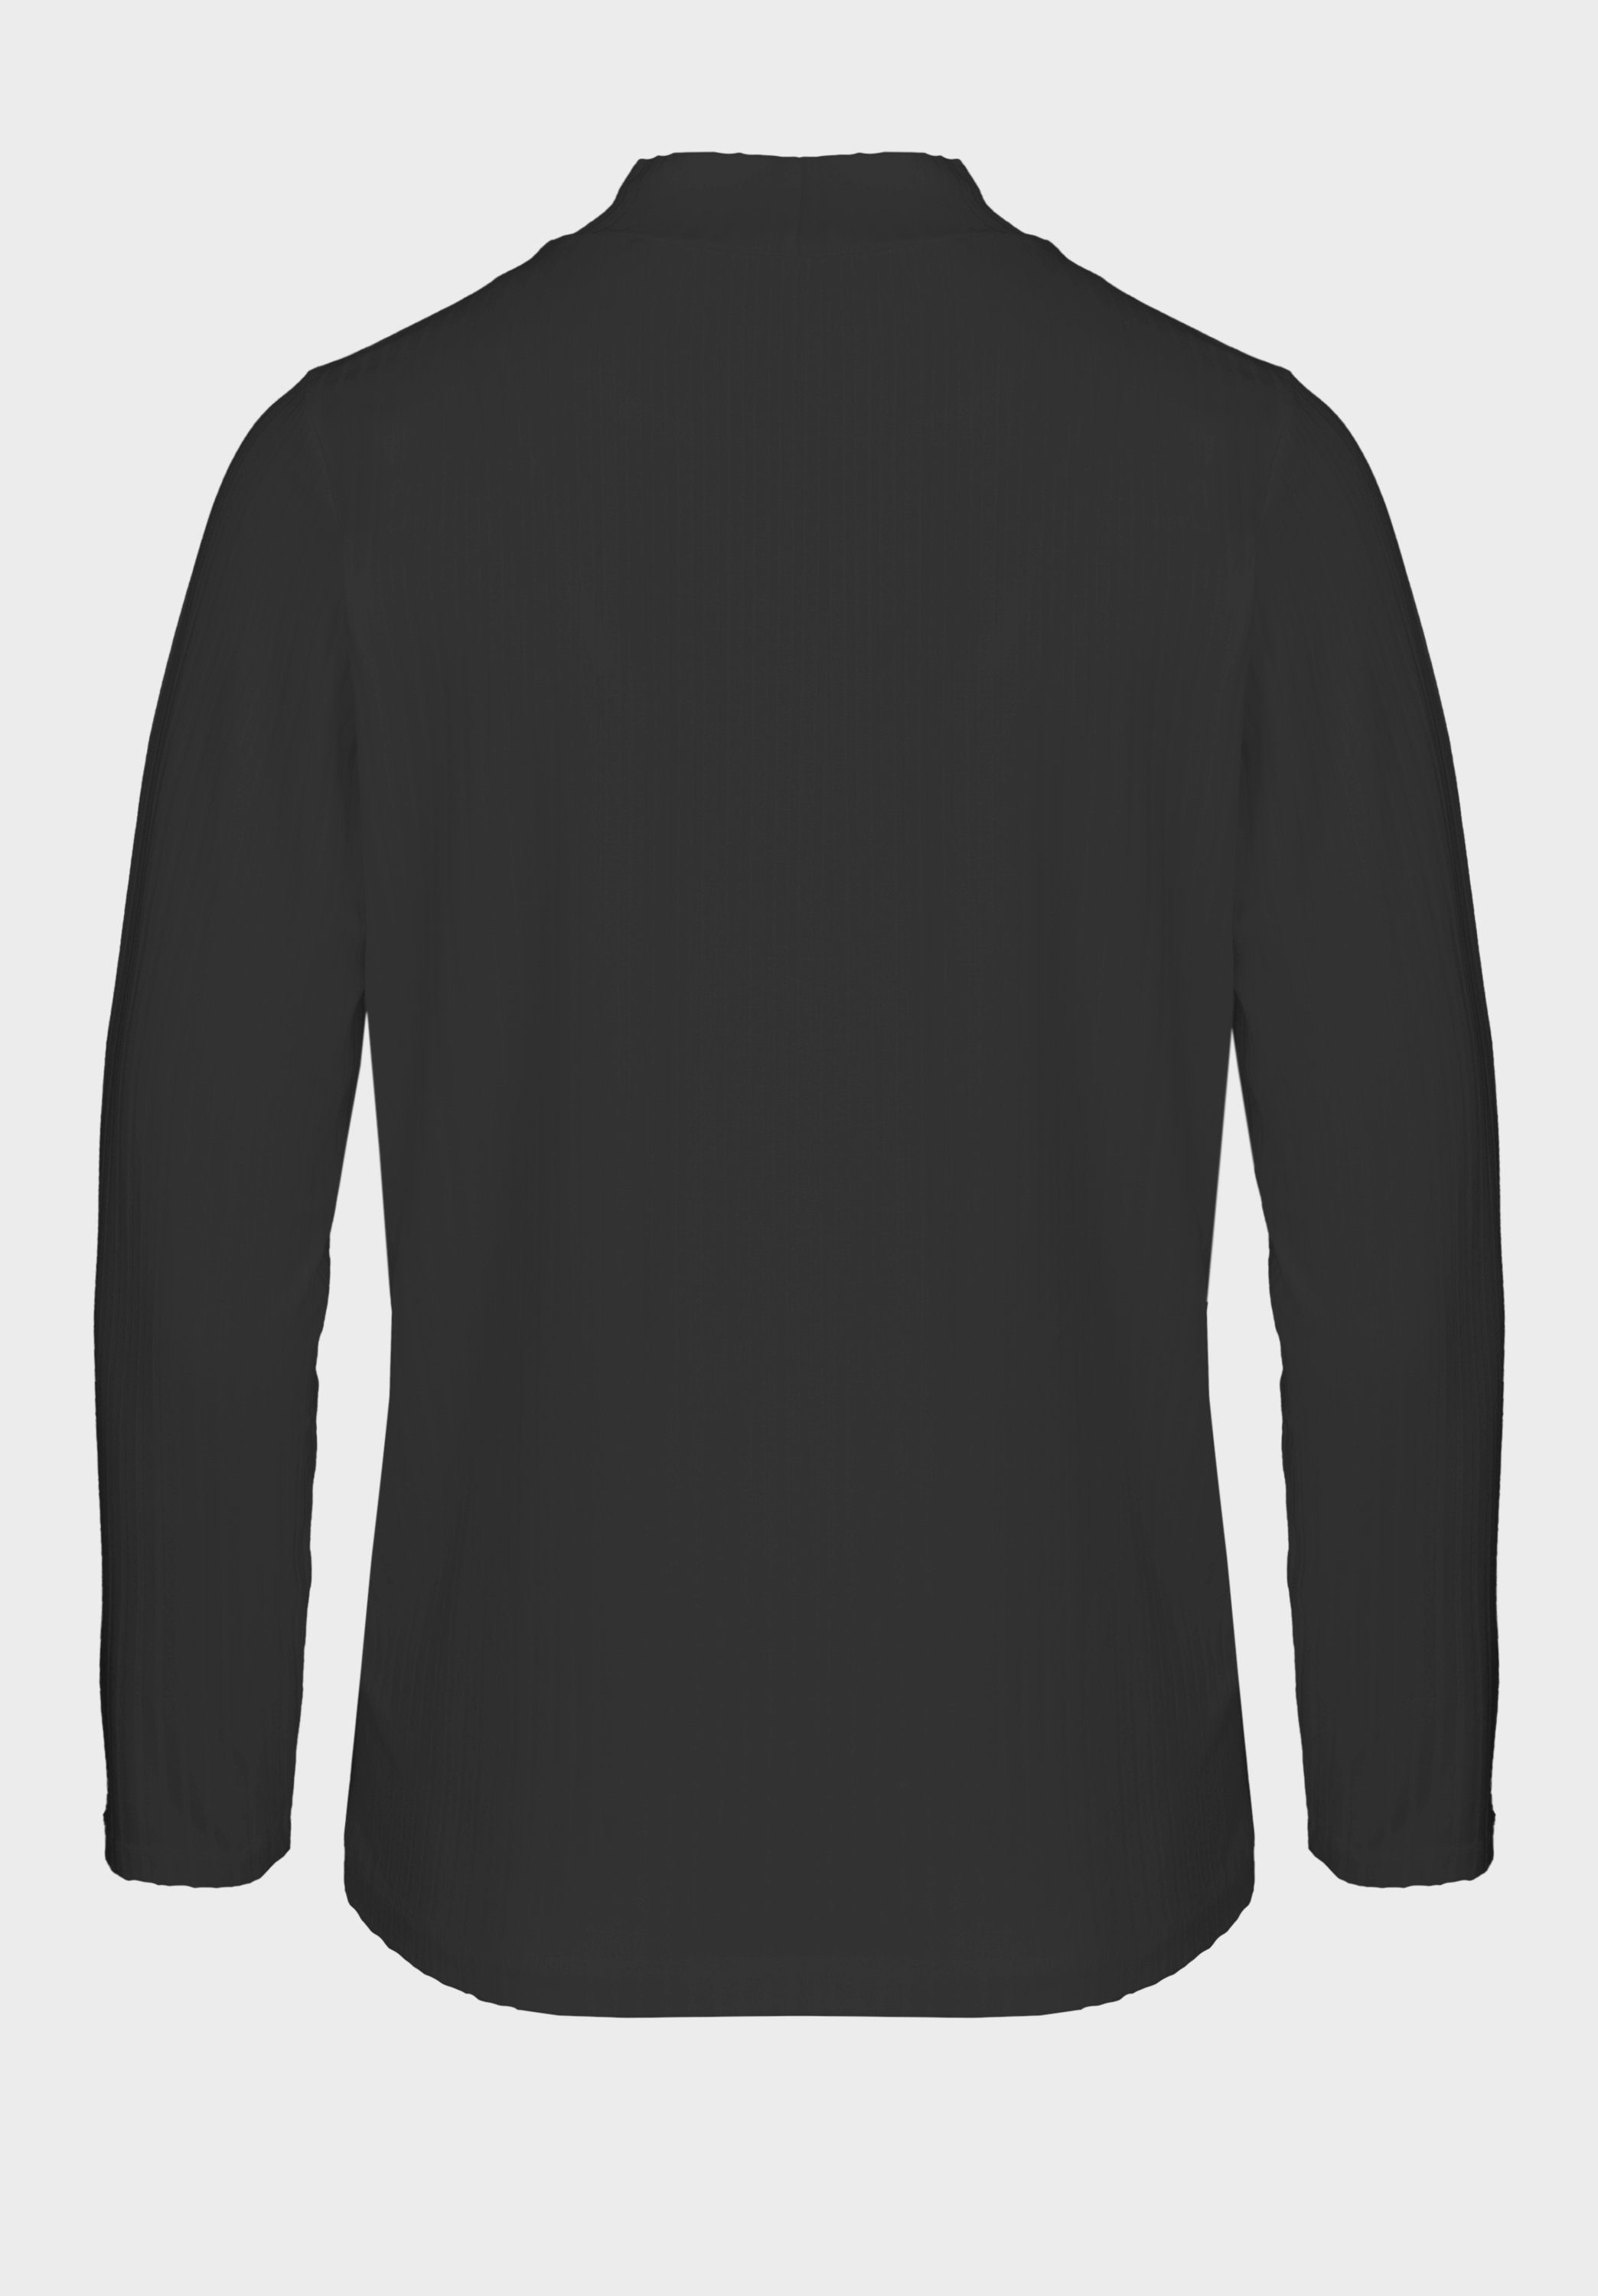 Langarmshirt in mit modernem GRETA bianca black Turtle-Neck Trendfarben coolen